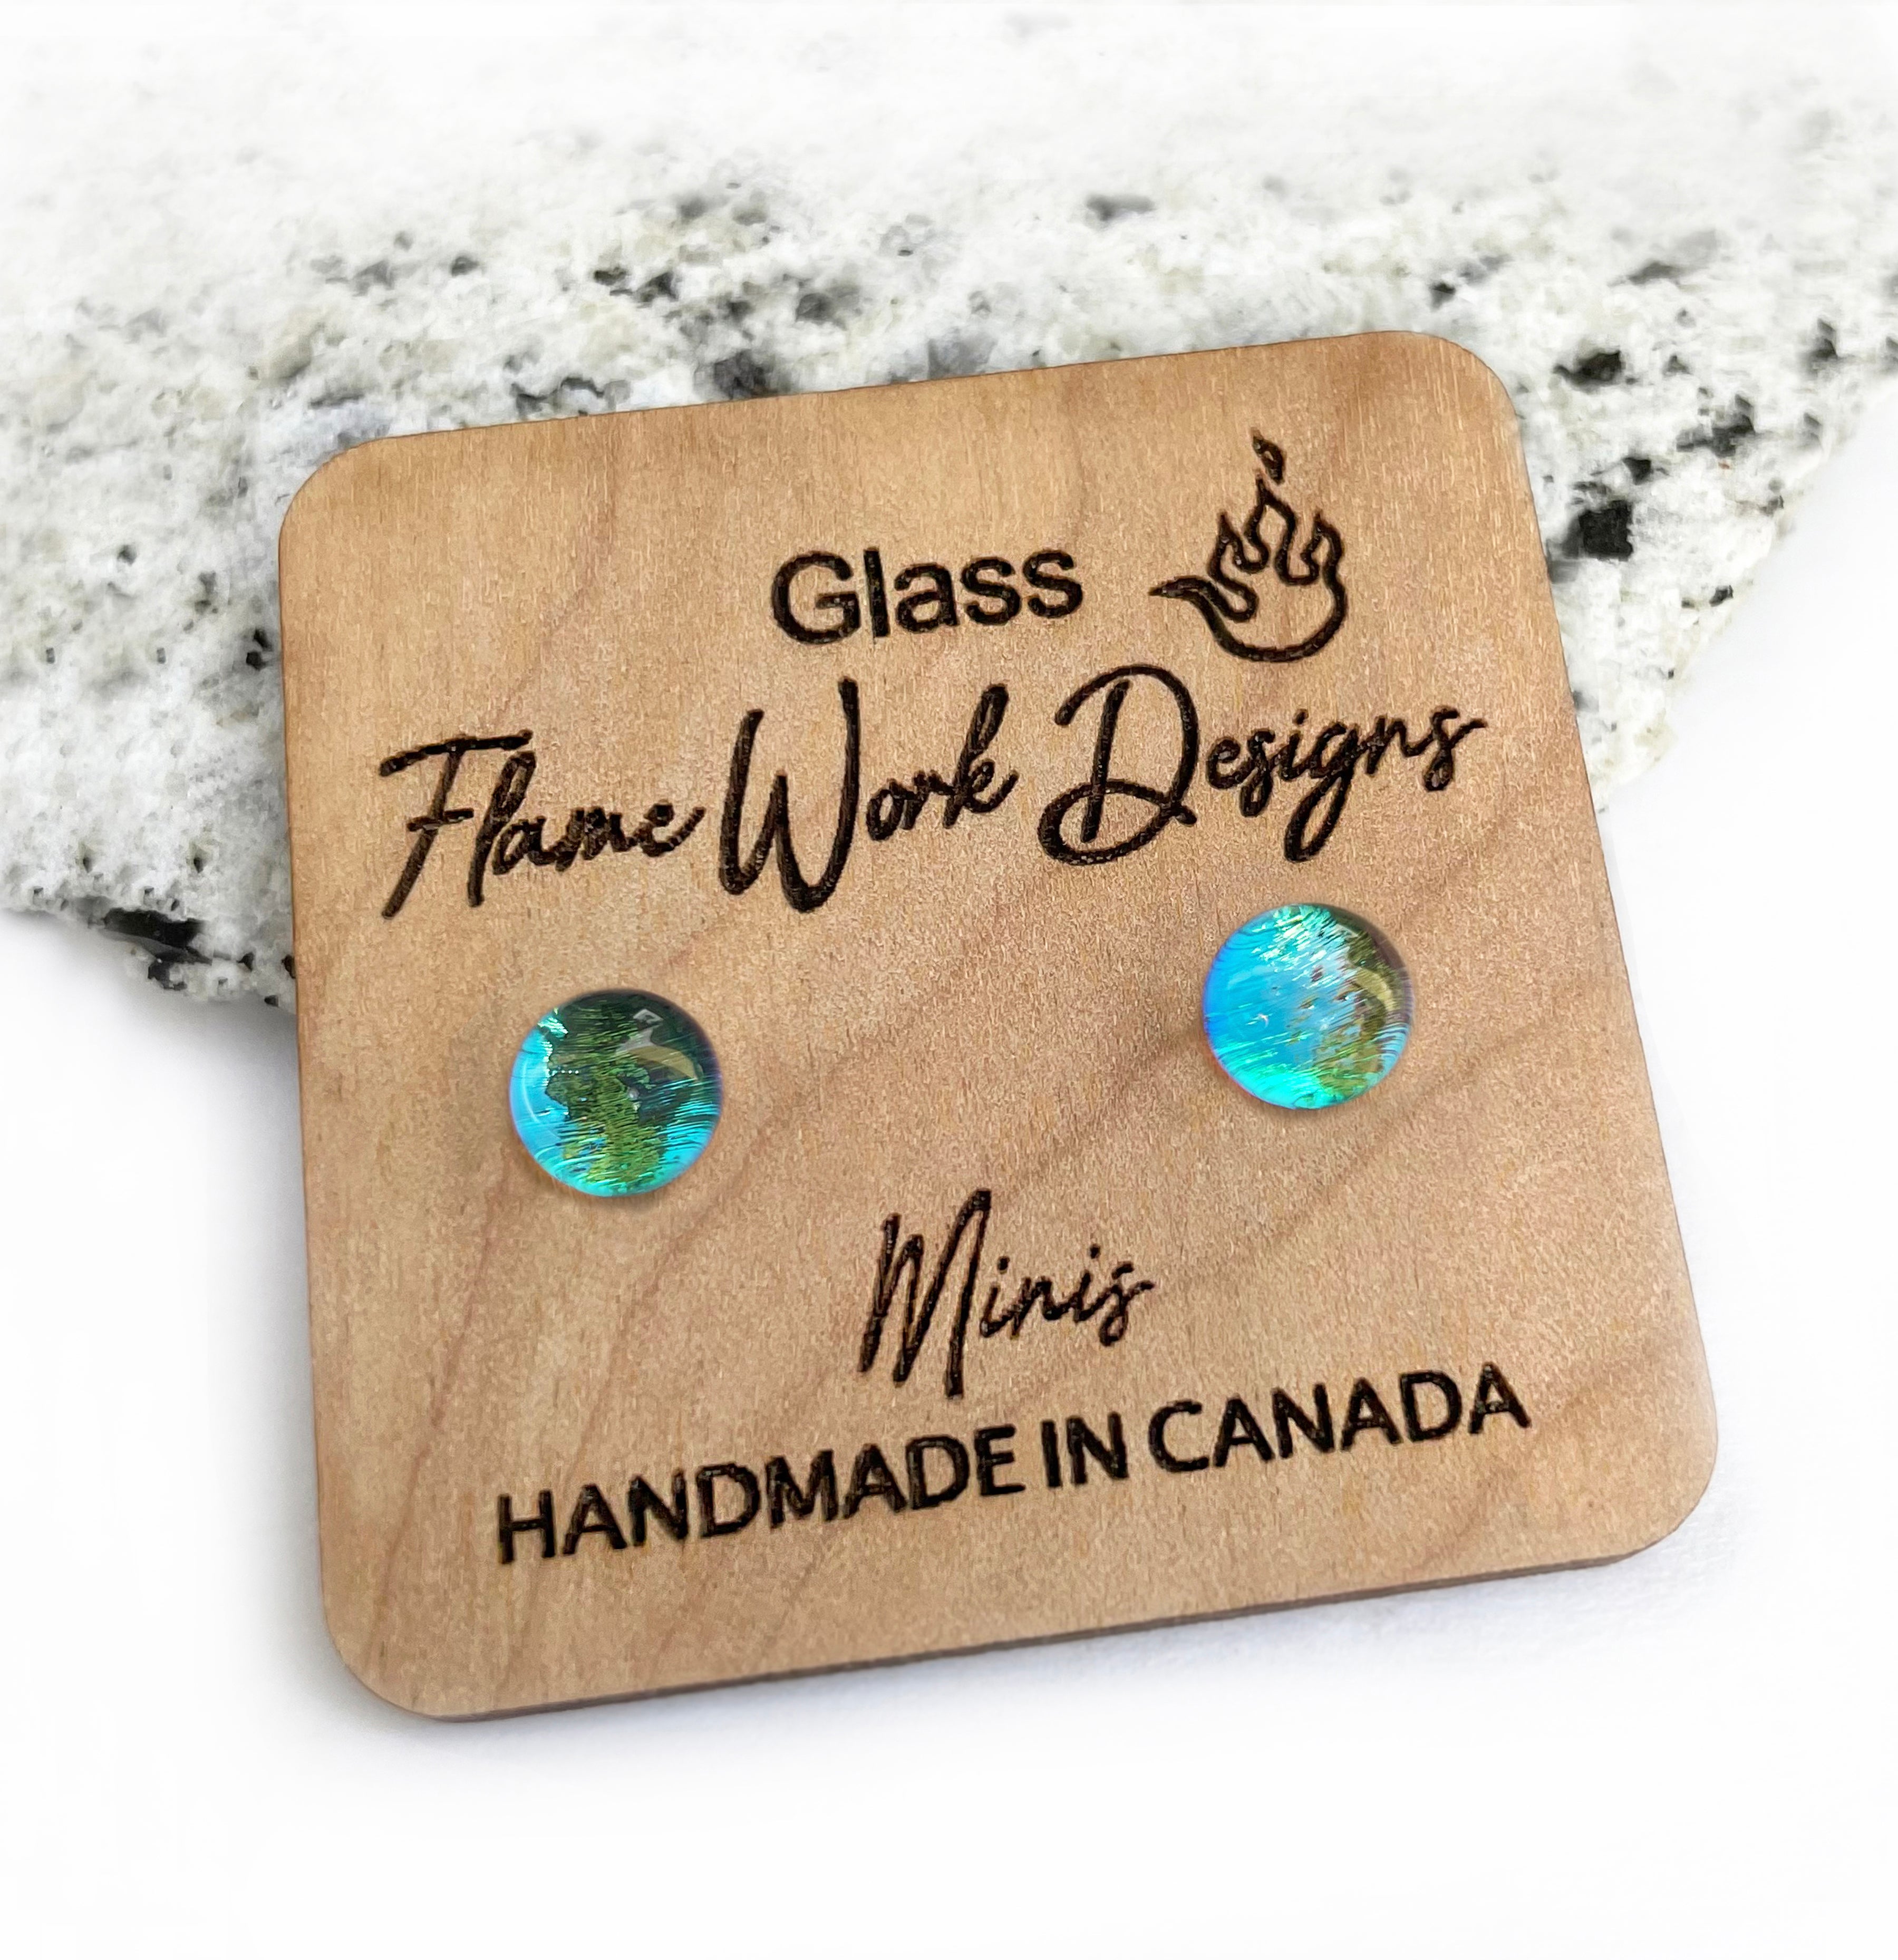 Dichroic Glass Studs, Key Lime Pie 6mm Mini Glass Earrings